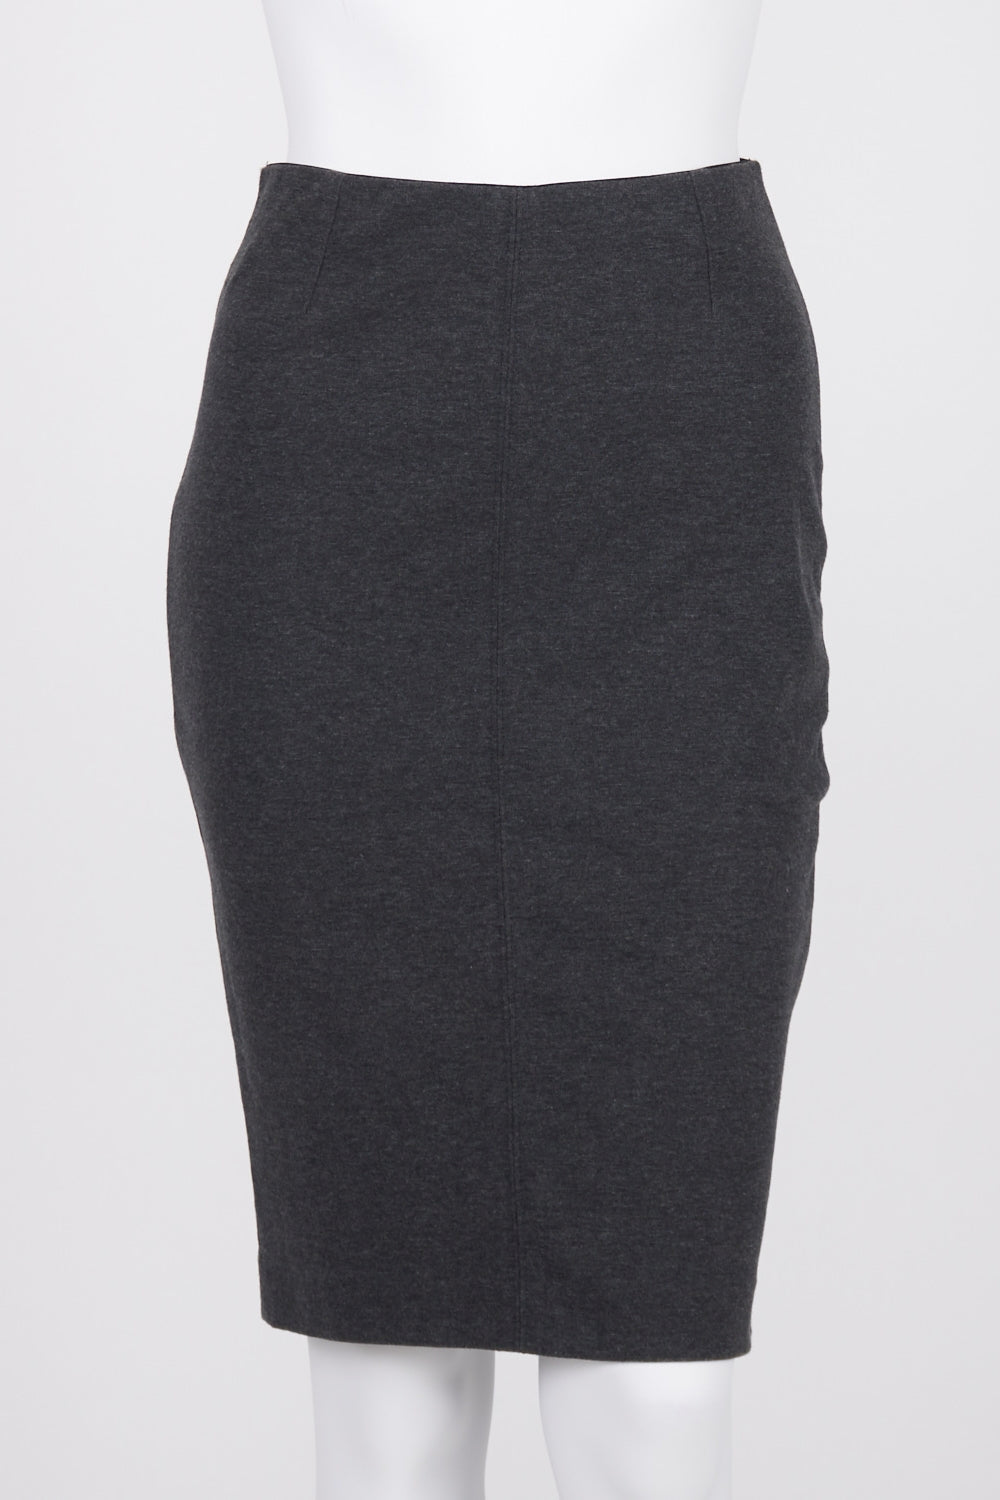 Uniqlo Grey Skirt XS